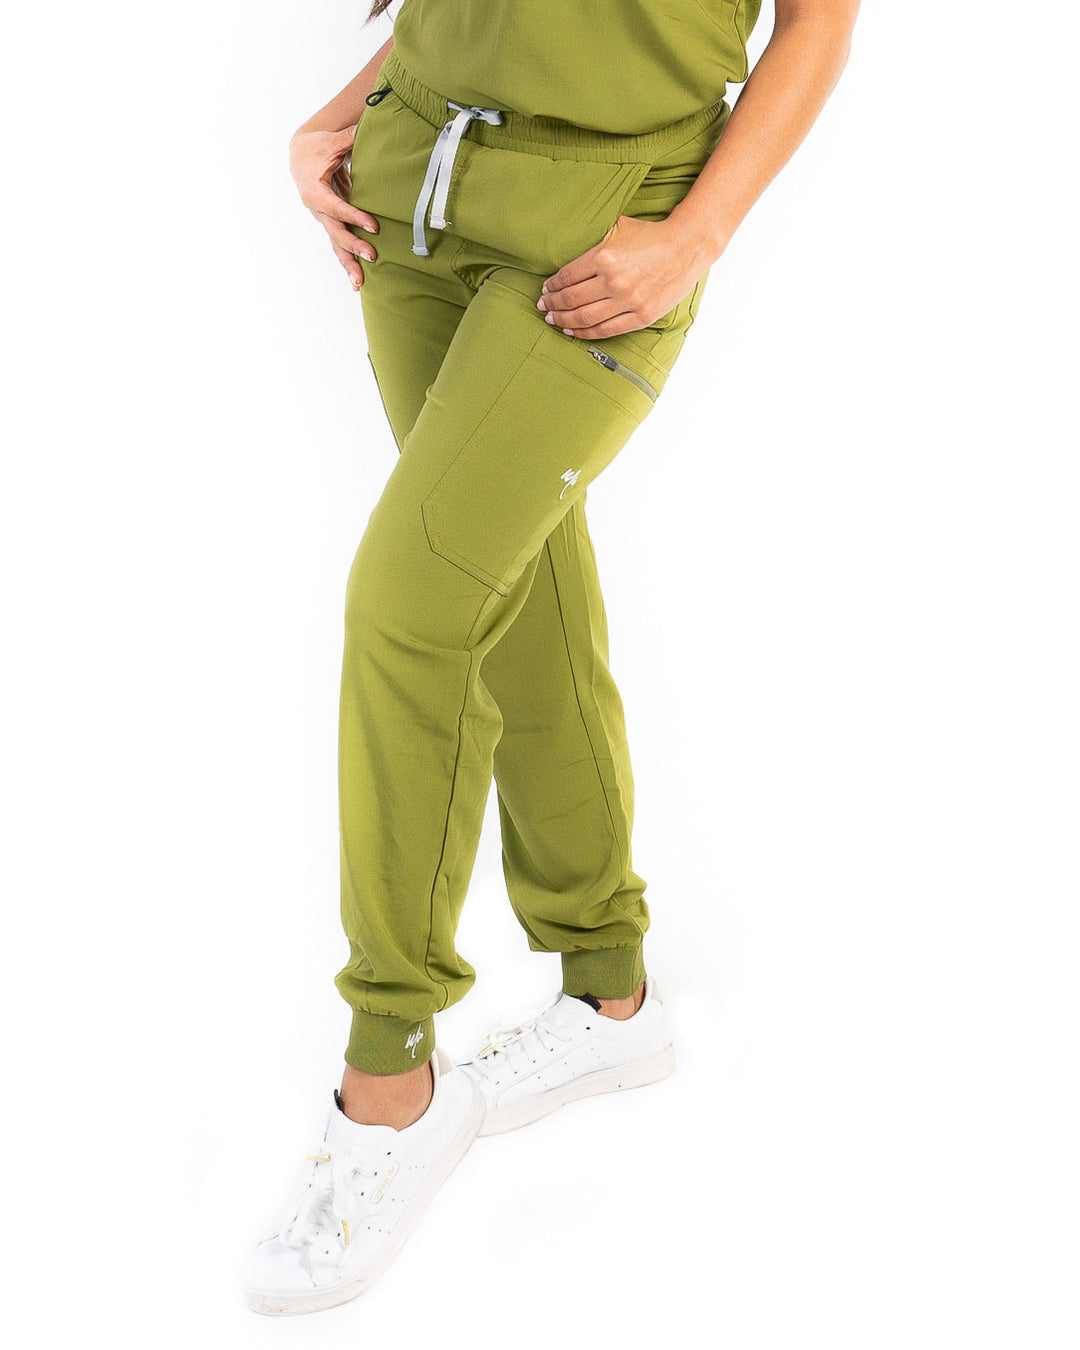 women's Olive Scrub Pants - Jogger Scrubs by Millennials In Medicine (Mim Scrubs)